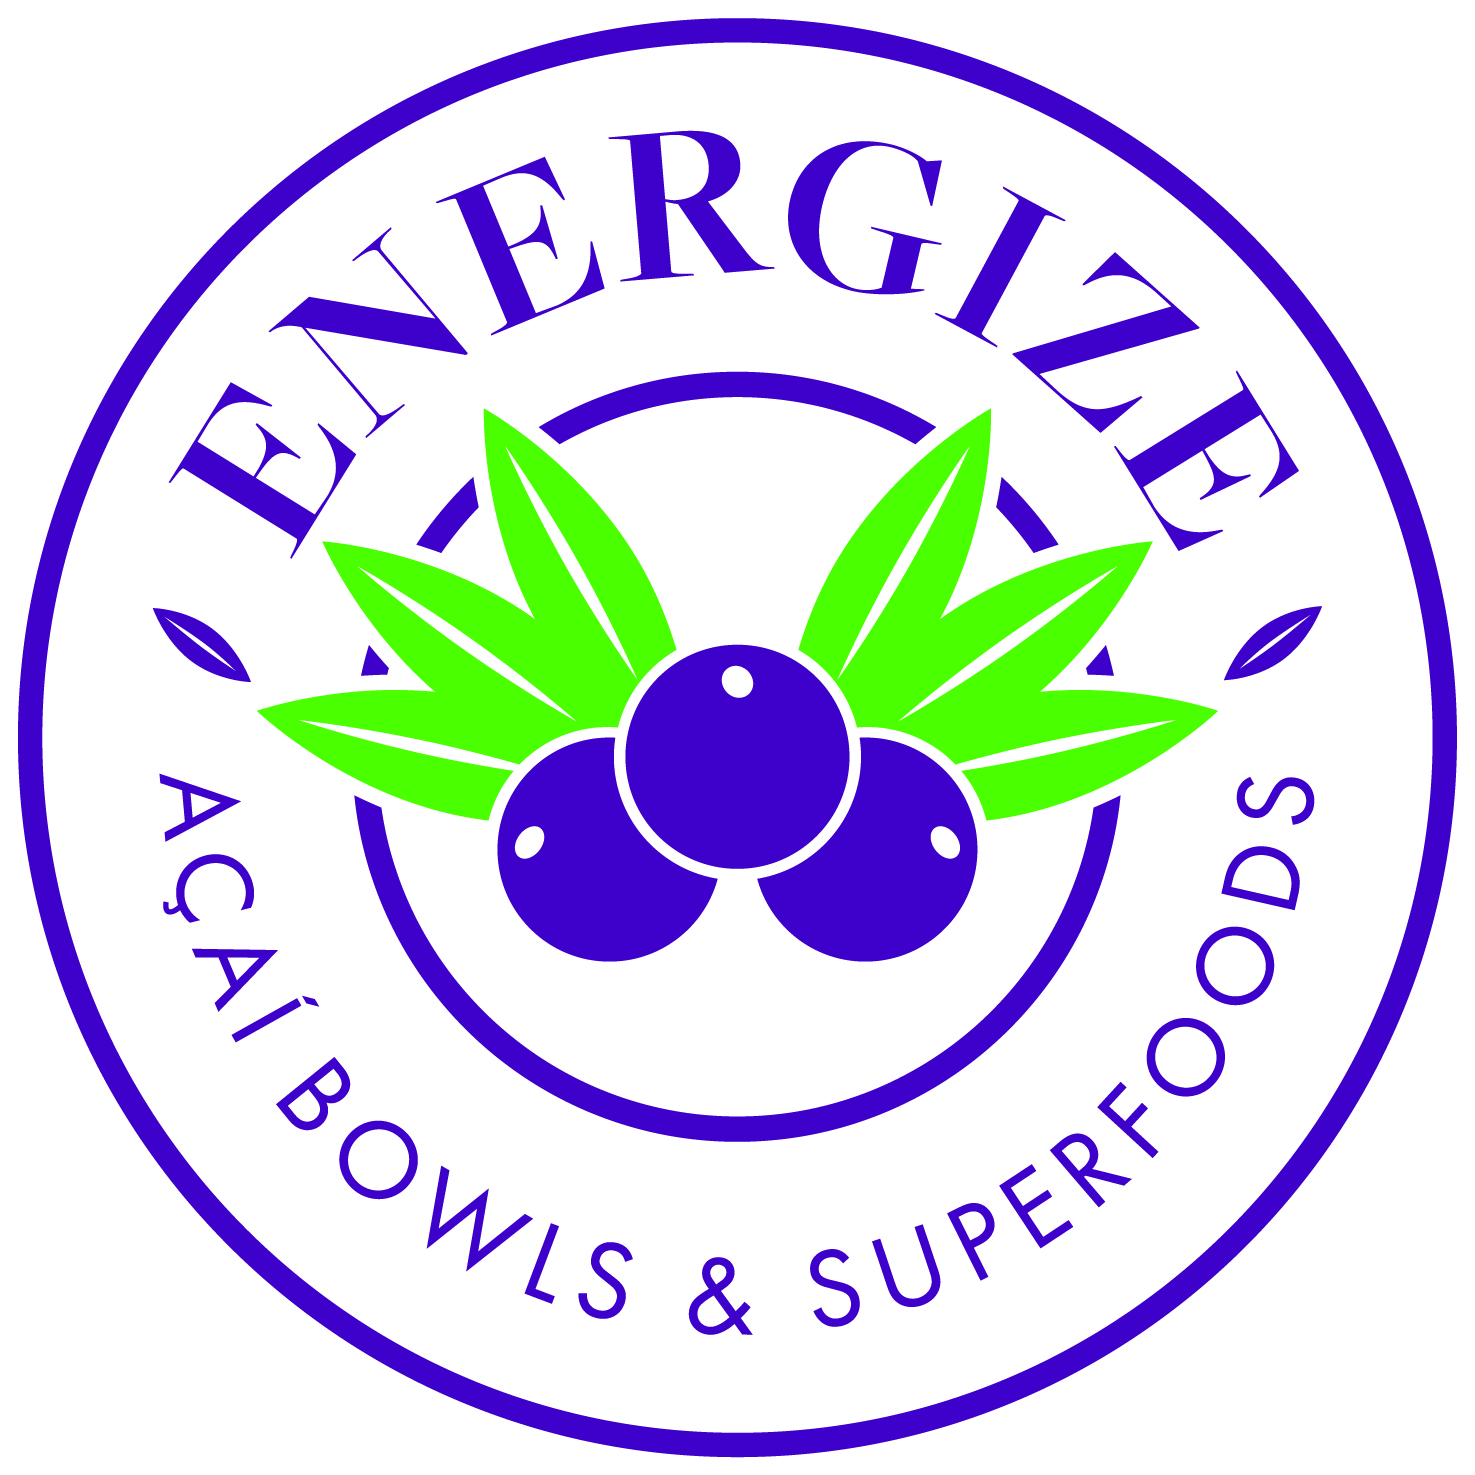 Energize Acai - logo